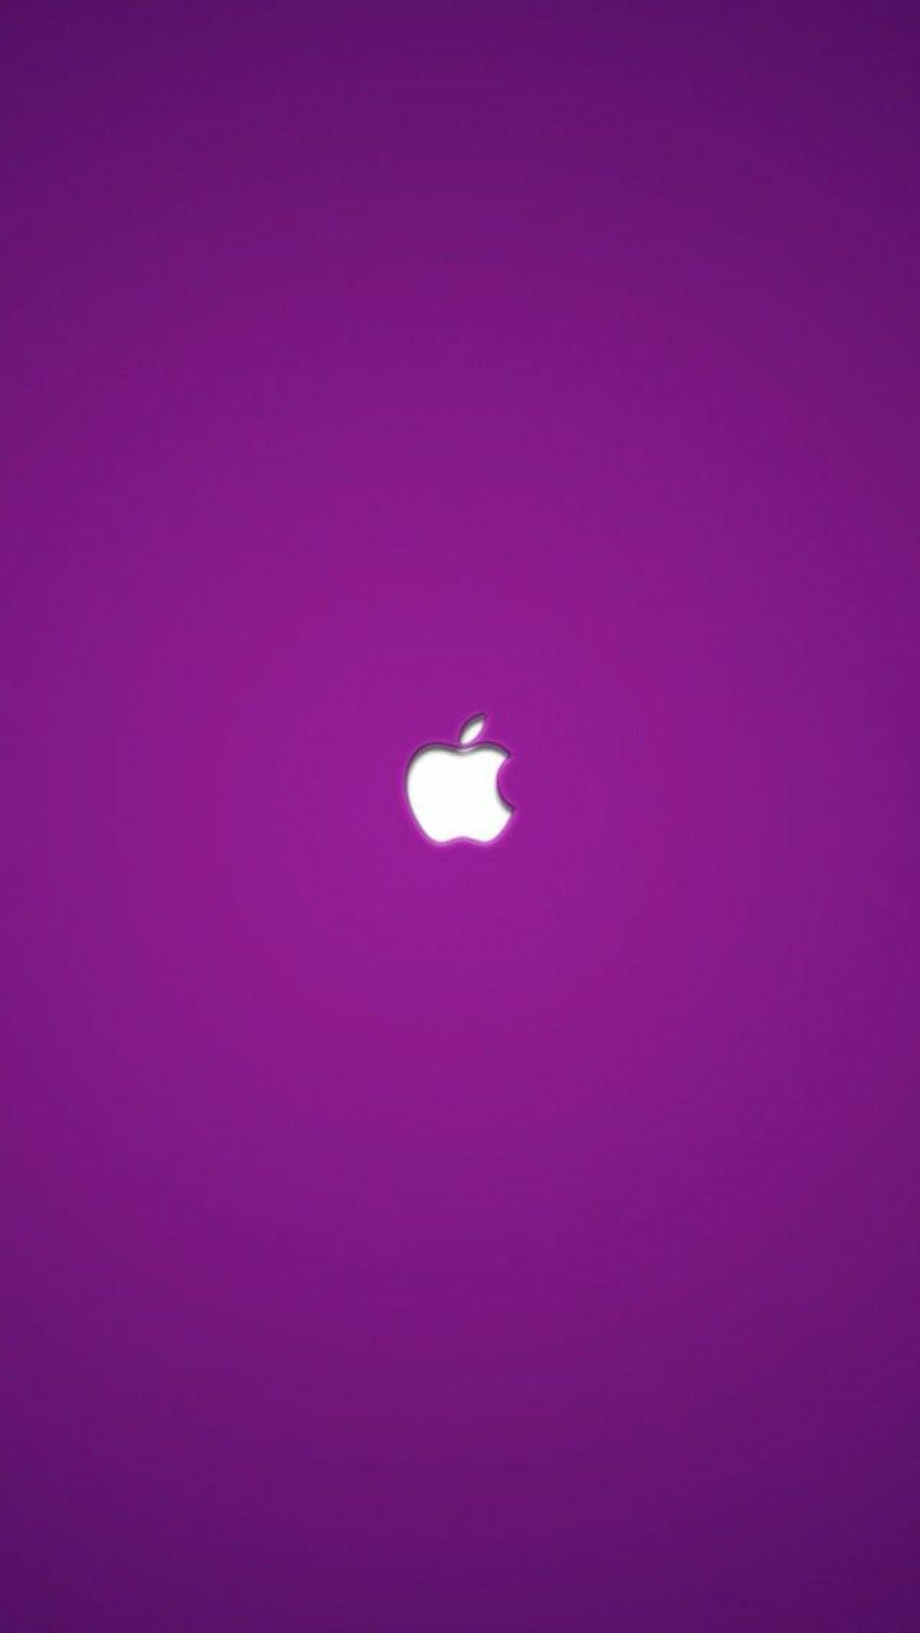 iphone logo purple